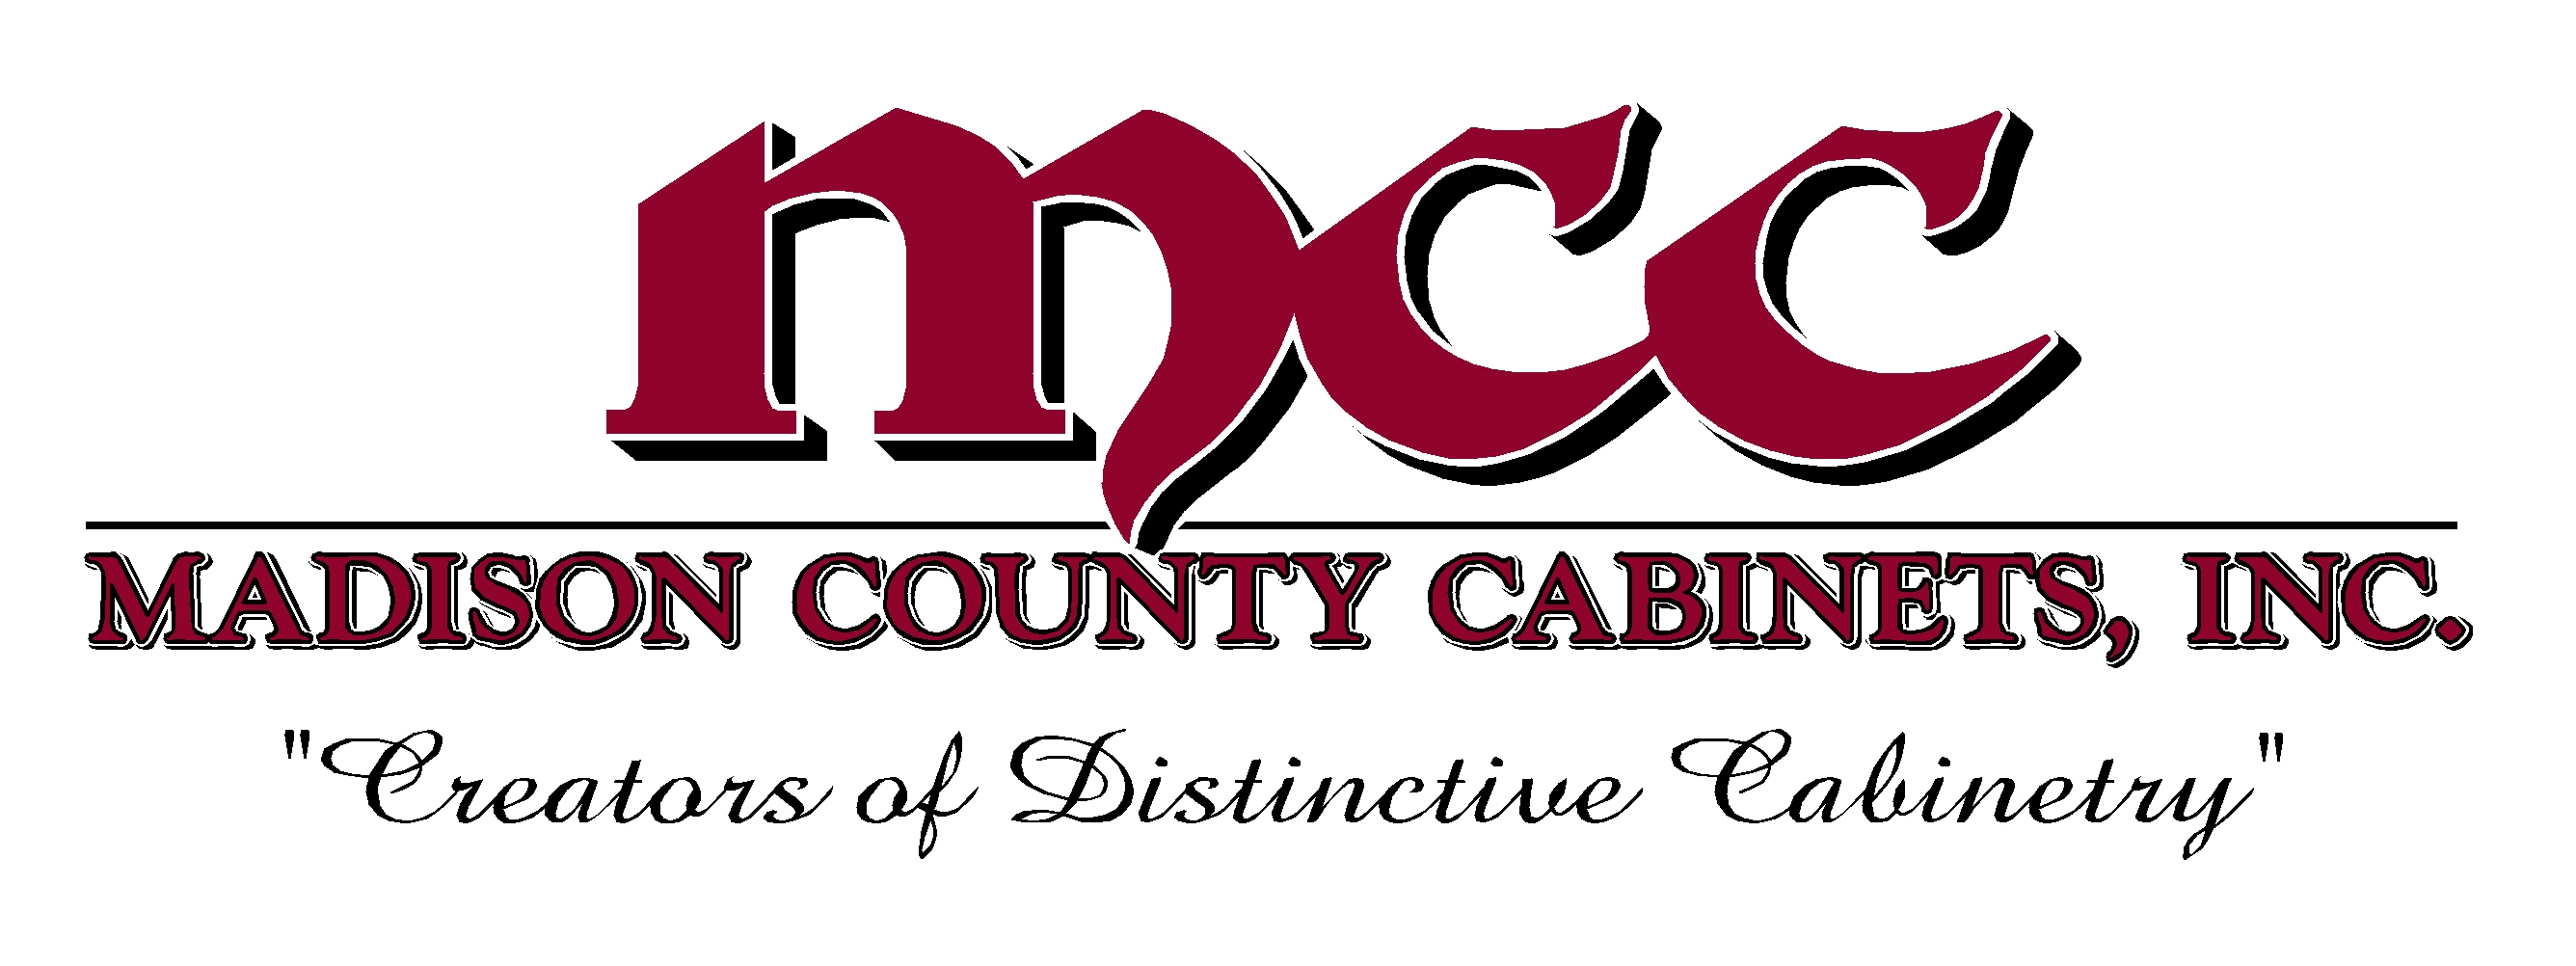 Madison County Cabinets, Inc. Logo